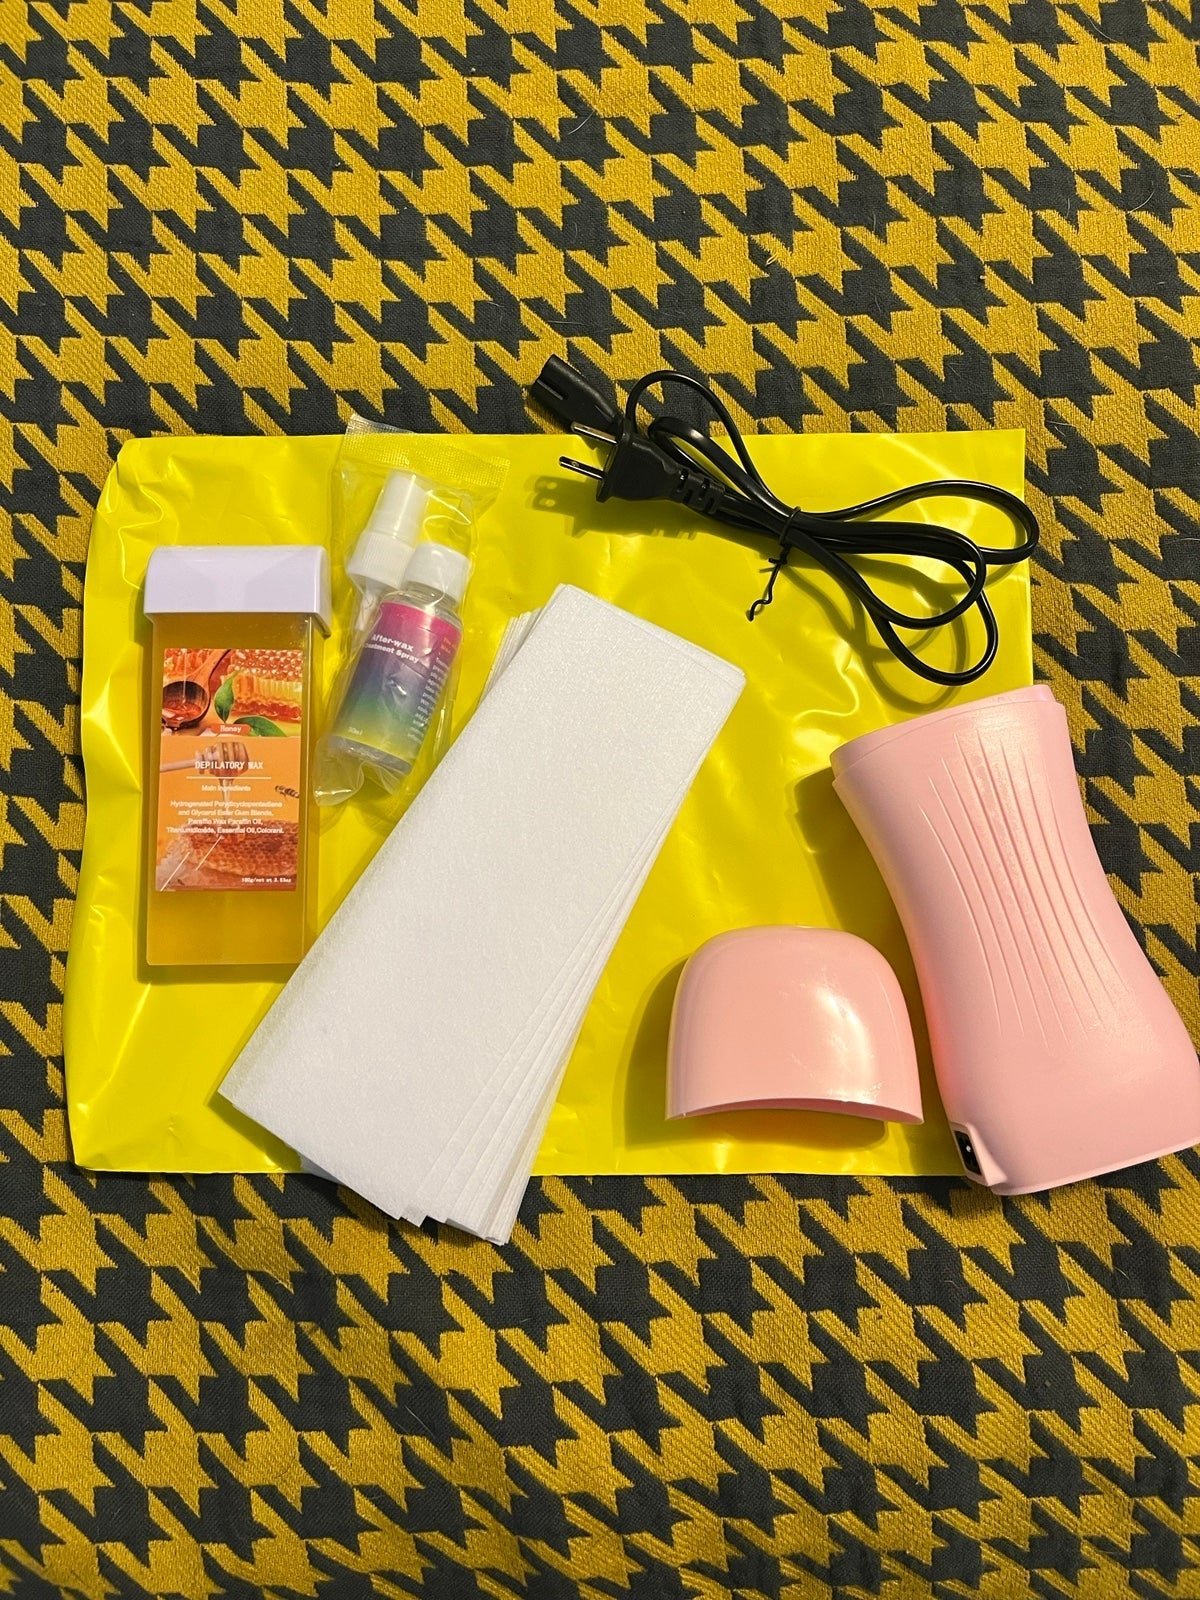 Roll On Wax Kit: Honey Wax Pink Cartridge Warmer Wax St